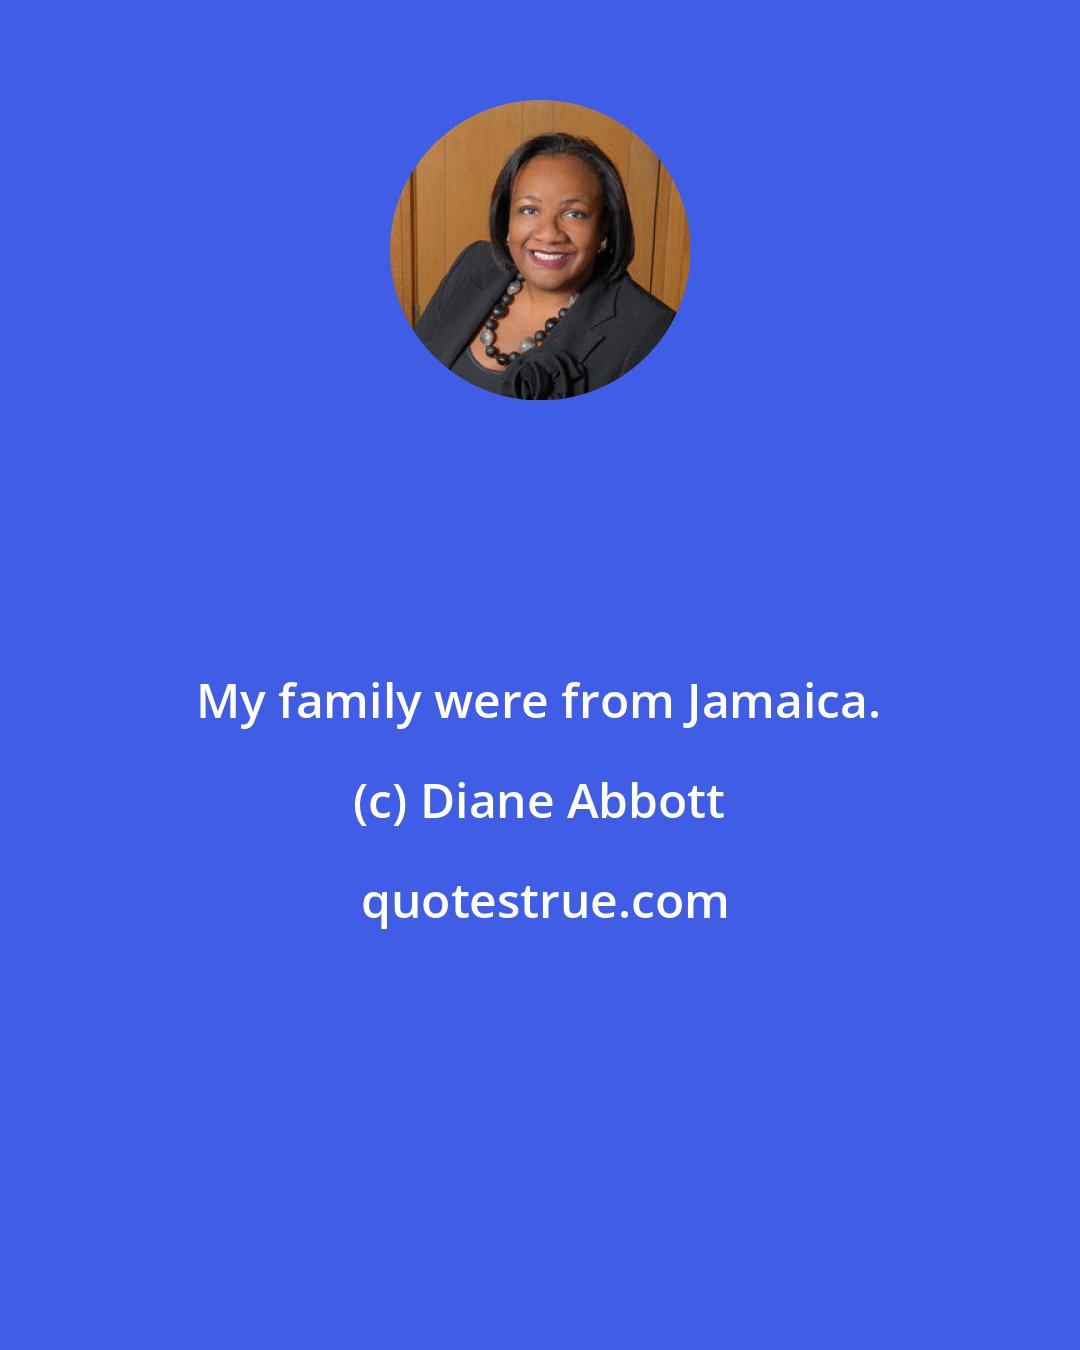 Diane Abbott: My family were from Jamaica.